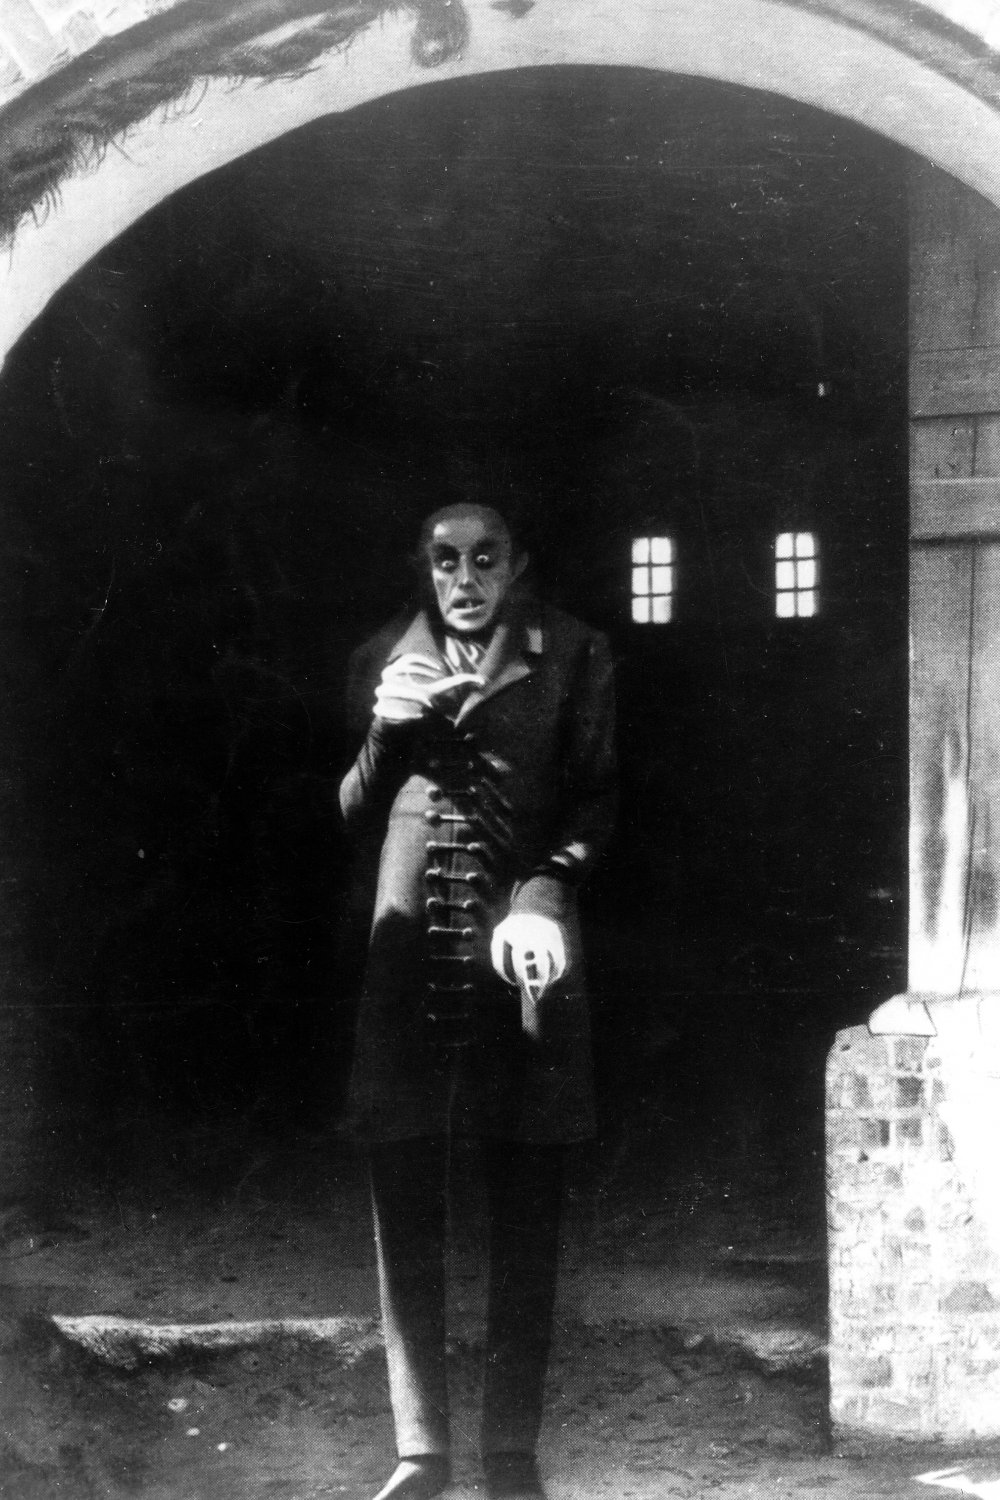 Alman Sinemasından Seyredilmesi Gereken 10 Dışavurumcu Film 4 – nosferatu 1922 004 max schreck portrait long shot appearing from the dark bfi 00m dny